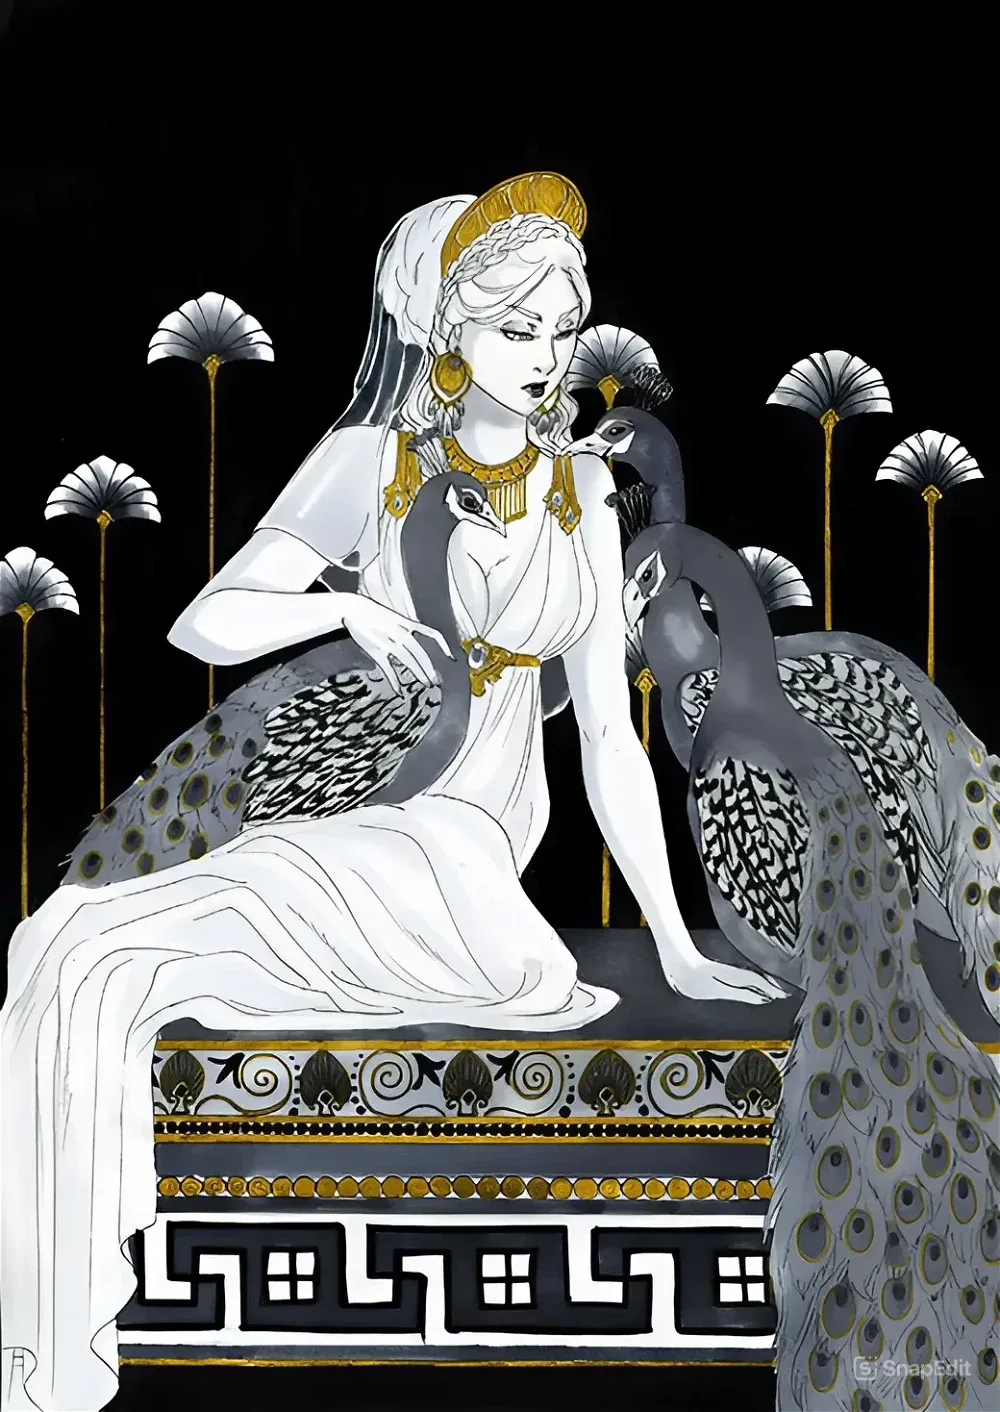 Avatar of Hera, The Goddess of Marriage